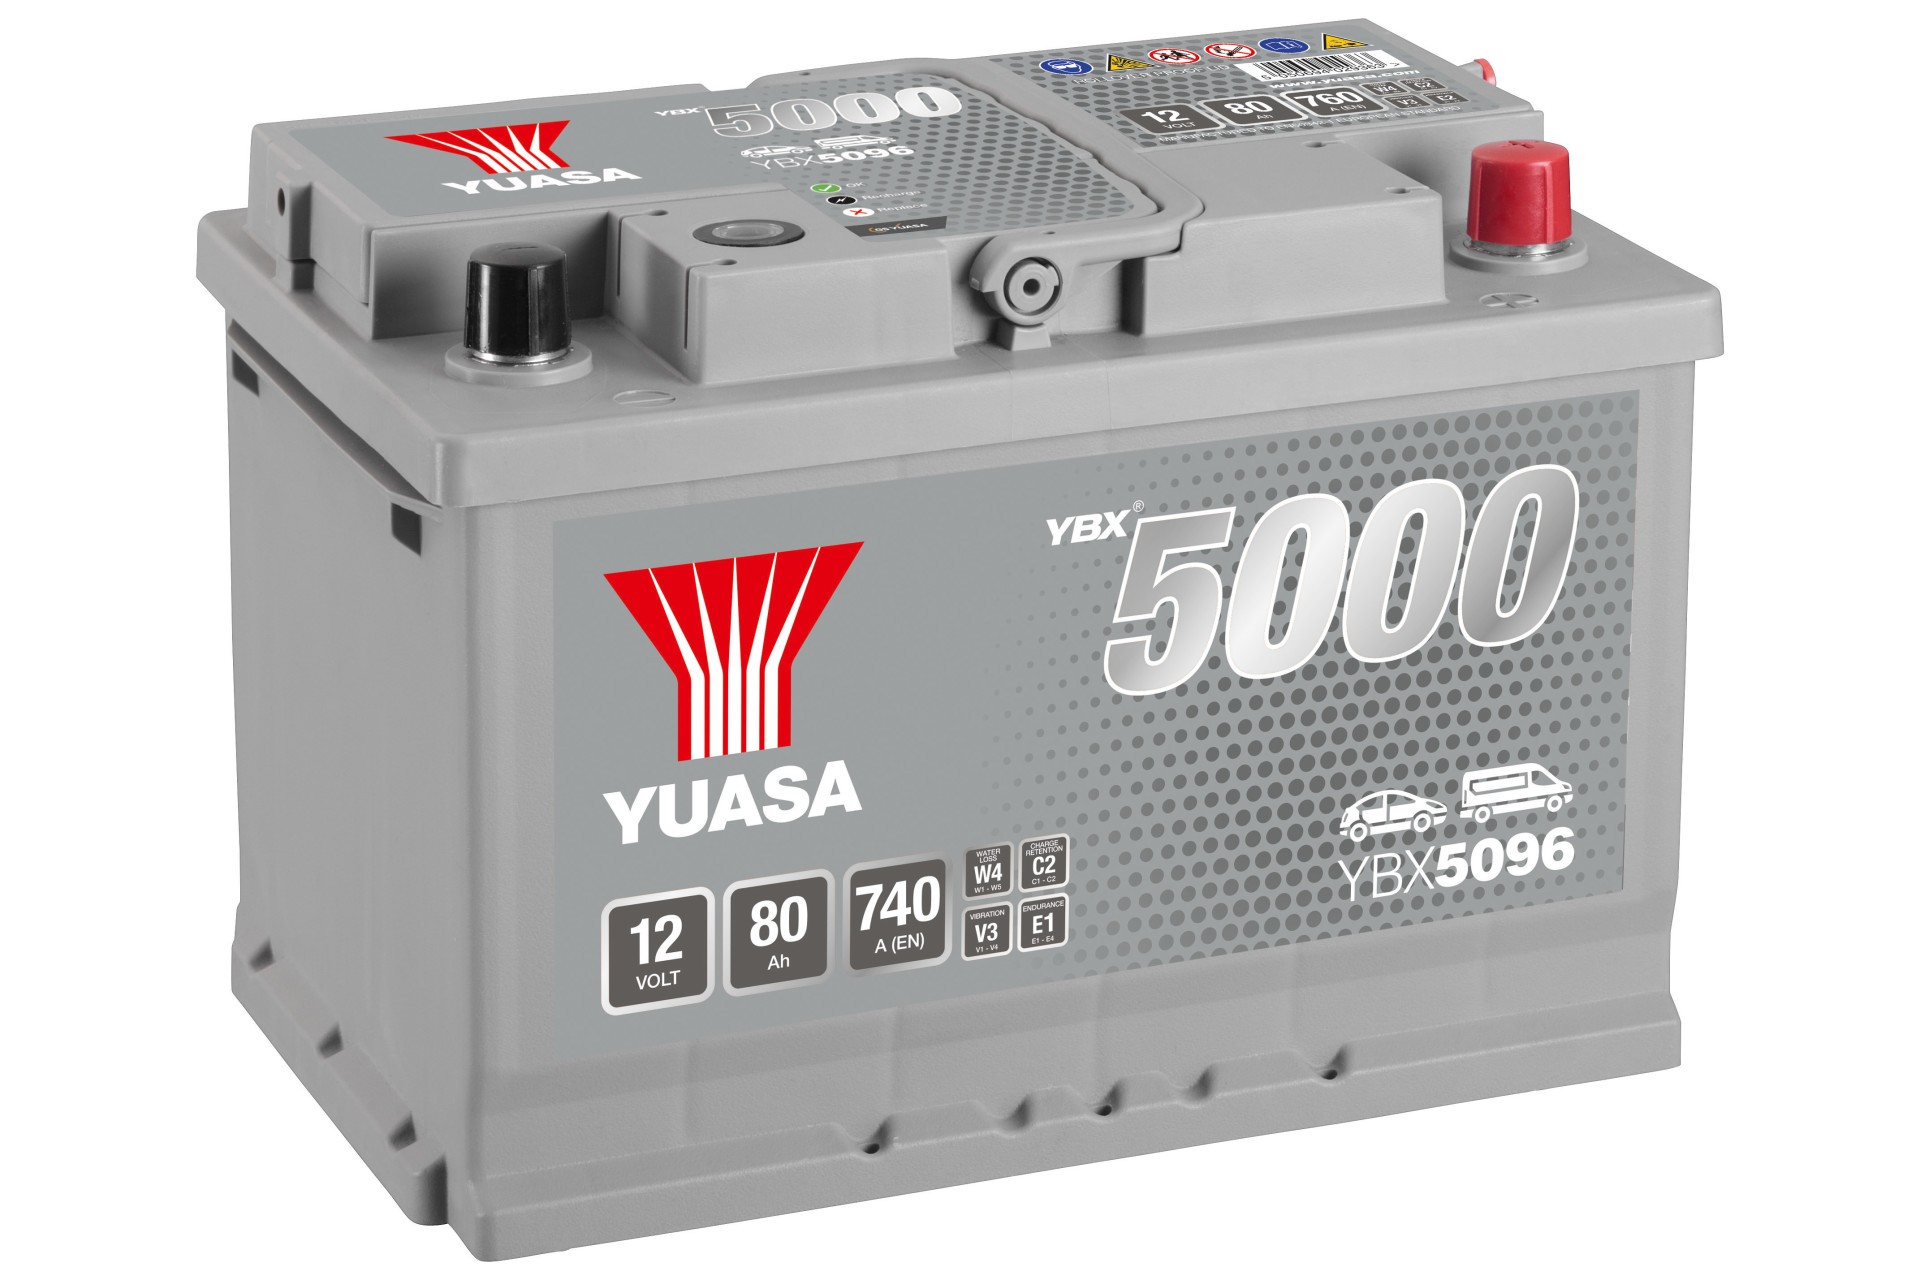 YUASA Autobatterie, Starterbatterie 12V 80Ah 740A 4.87L